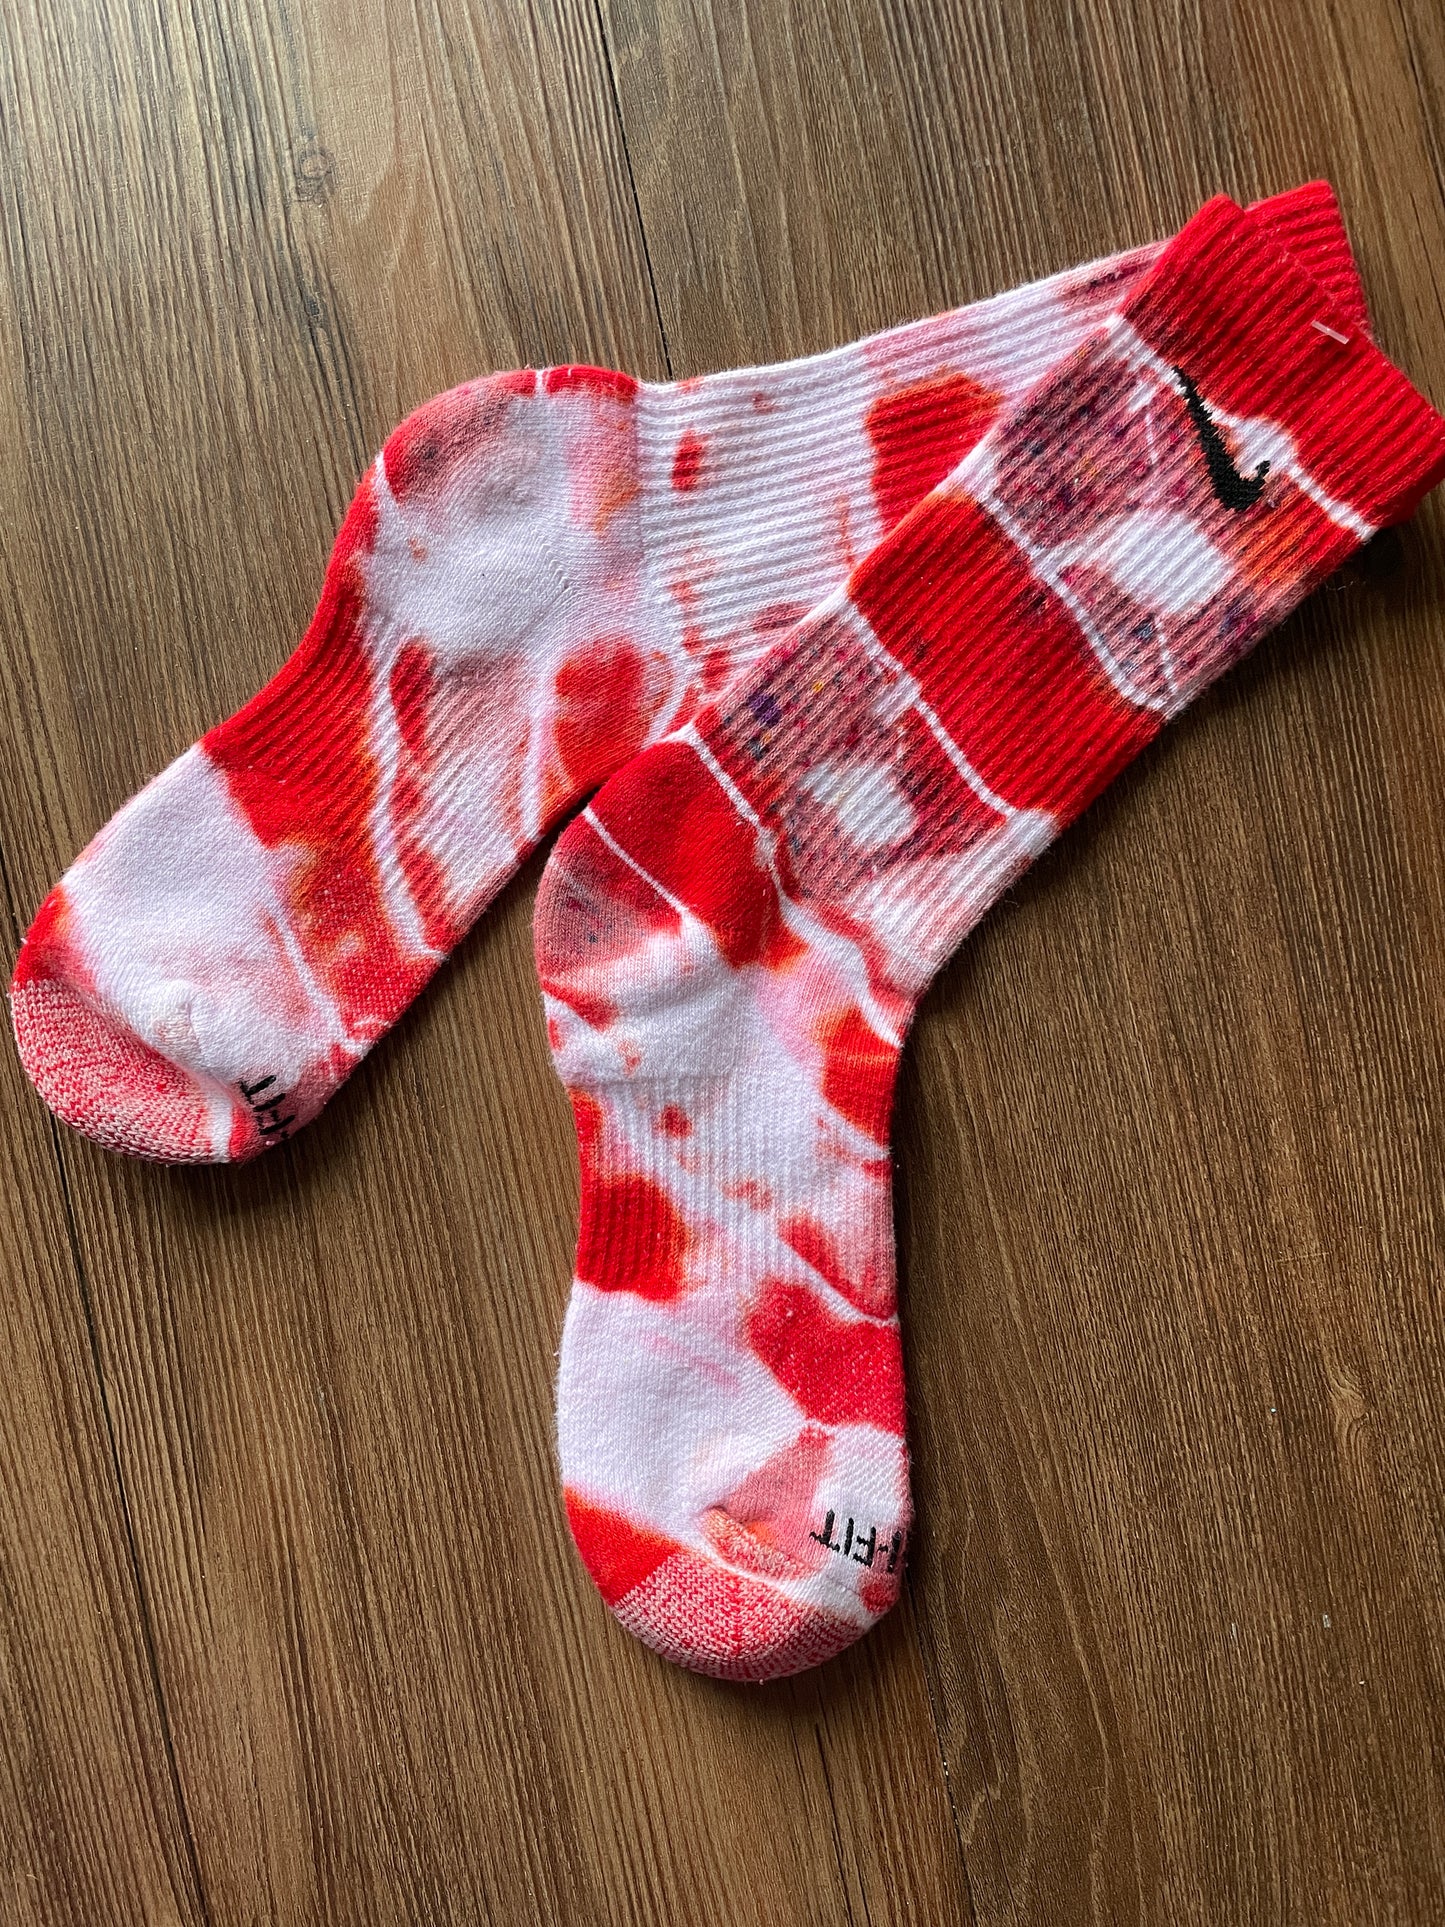 Red and Pink Tie Dye Nike Dri-FIT Everyday Plus Training Socks - Size Medium (Men's 6-8/Women's 7-10)